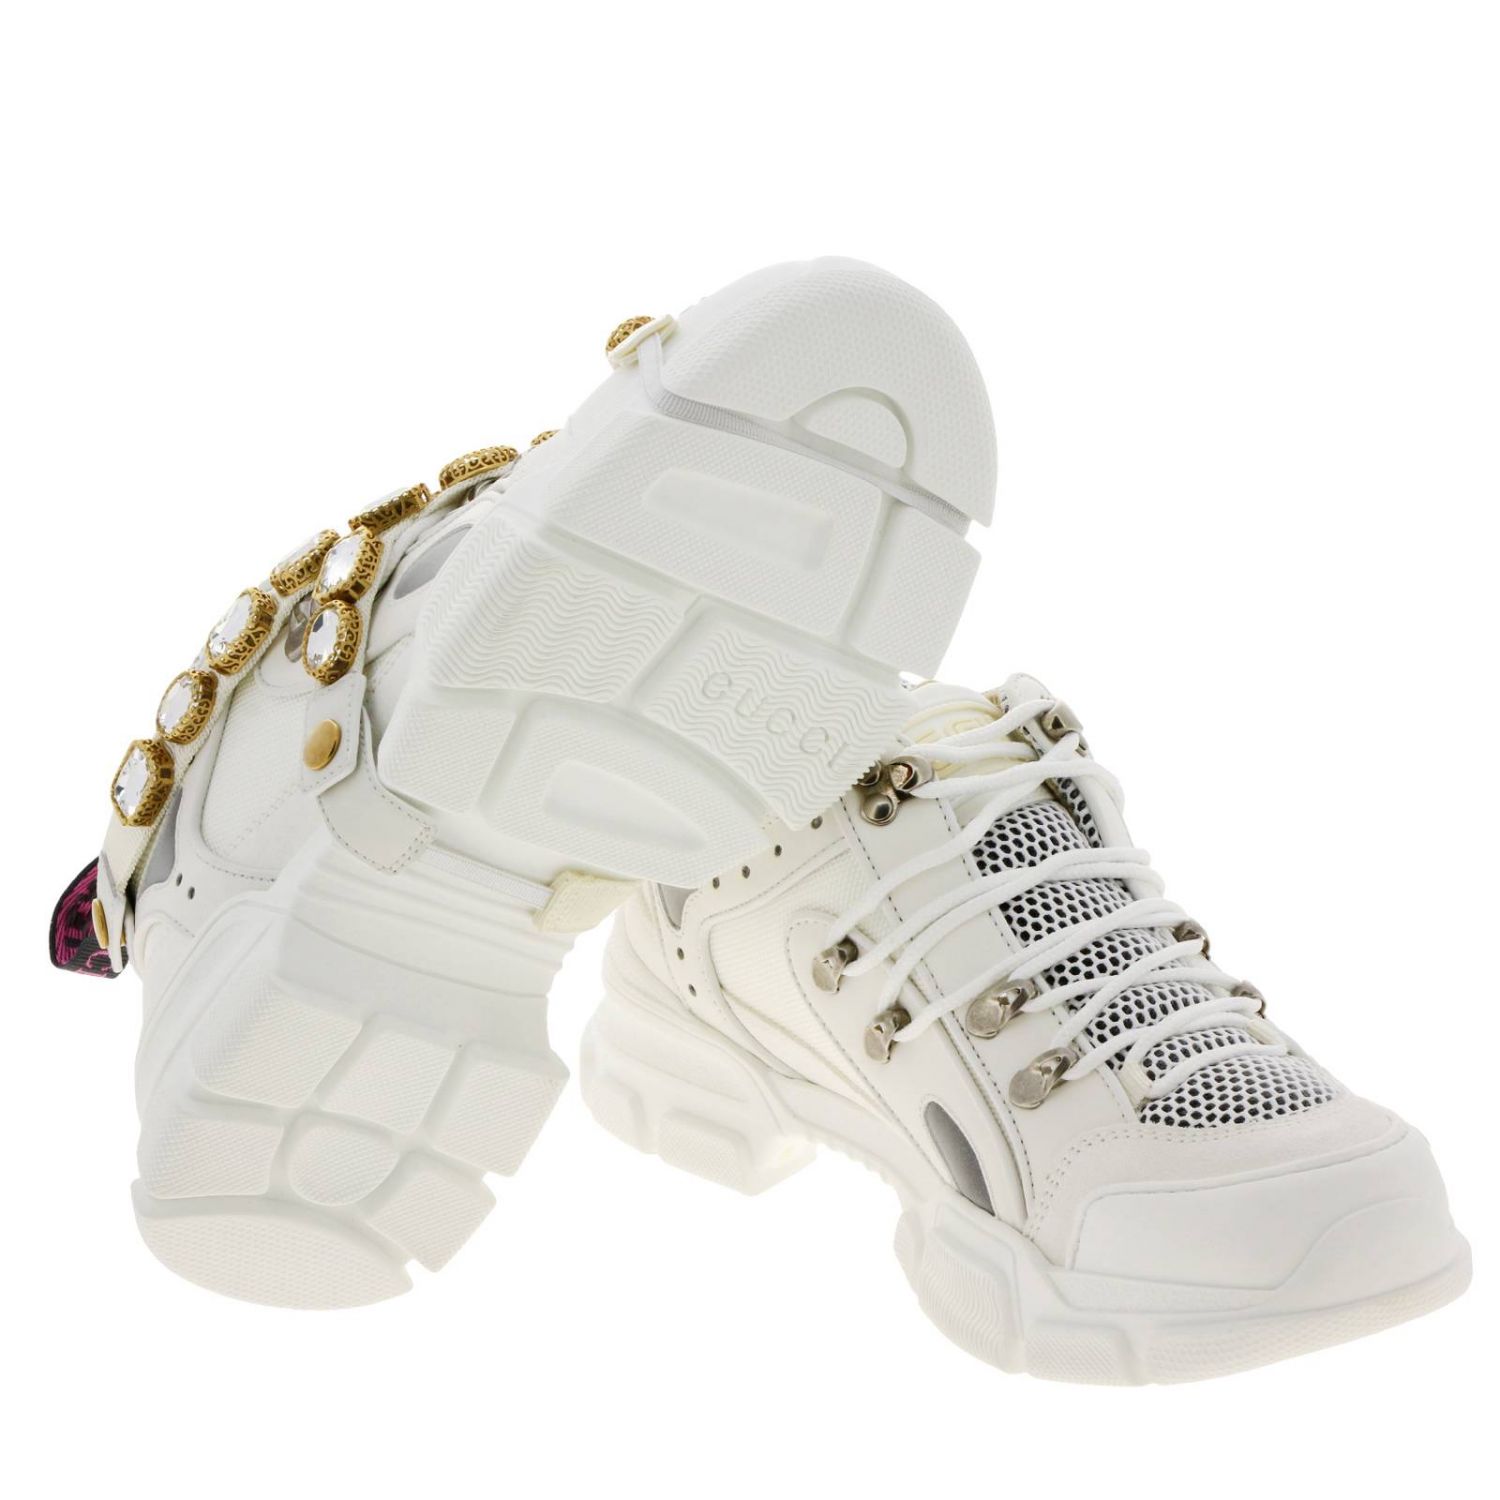 GUCCI: Sneakers women | Sneakers Gucci Women White | Sneakers Gucci